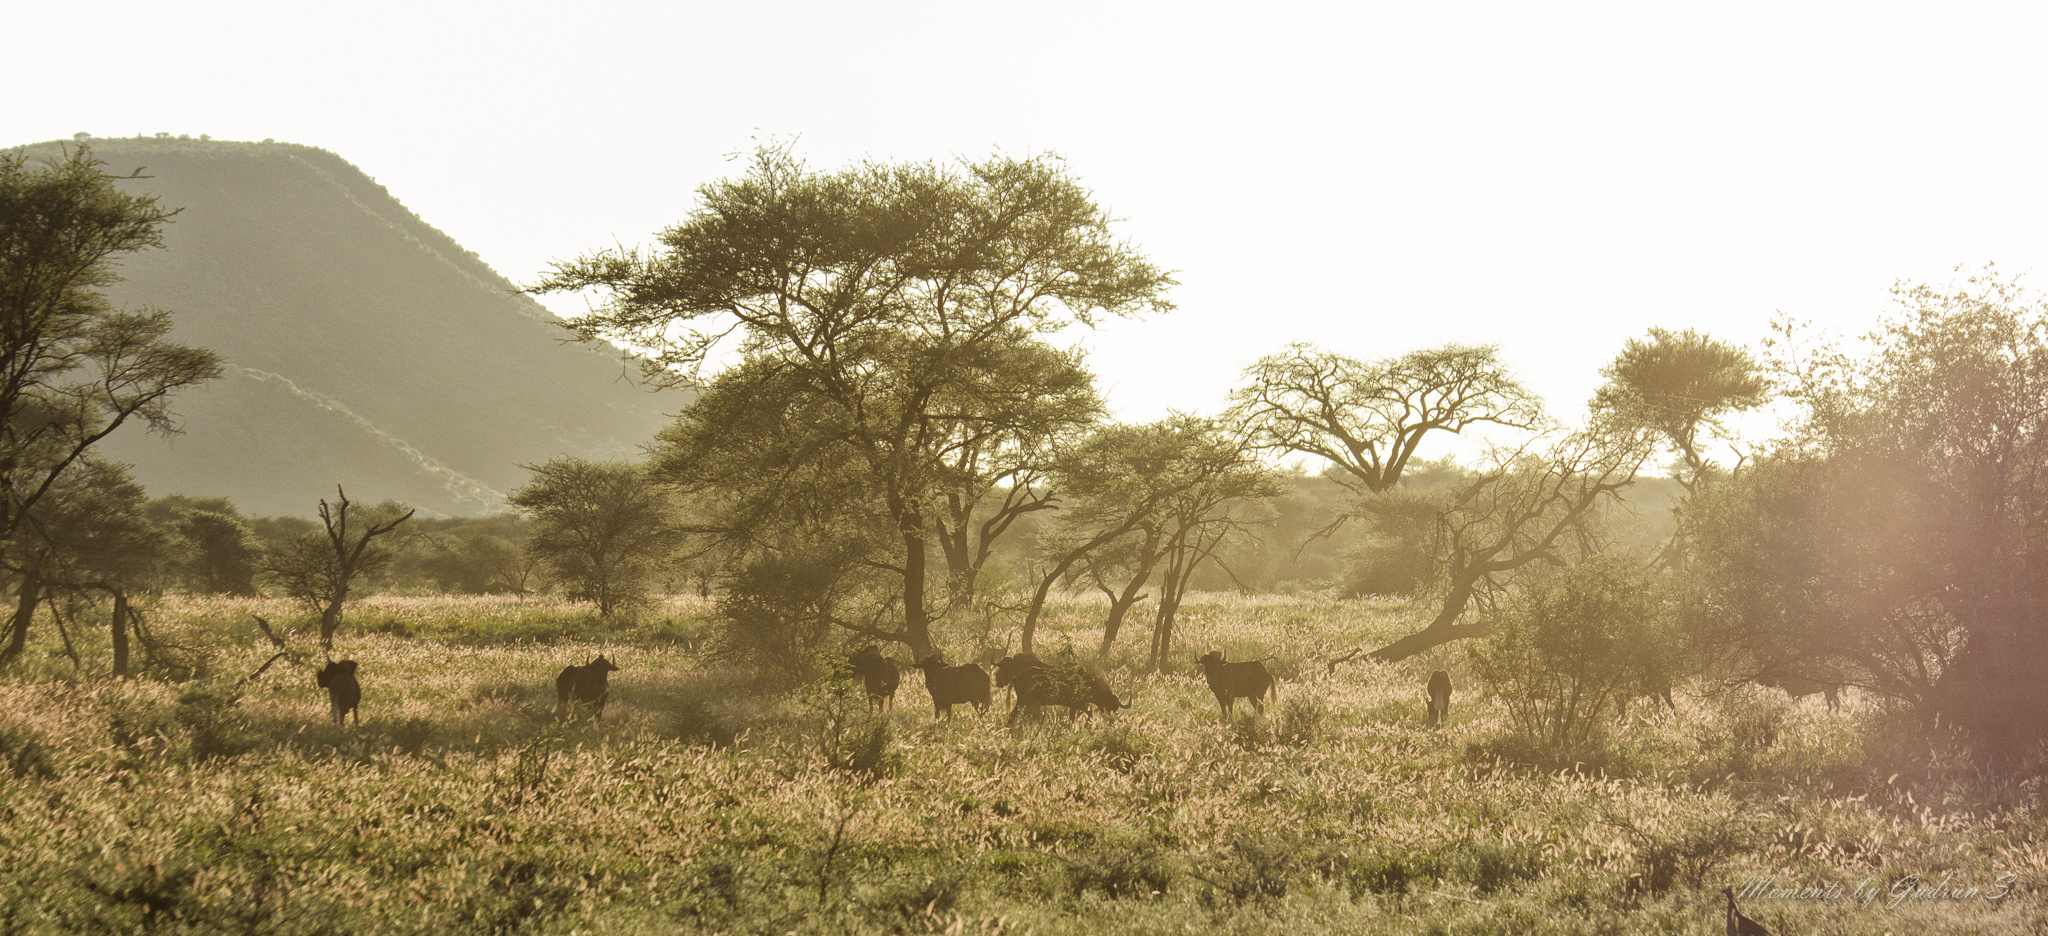 Morgendlicher Gamedrive - Erindi Private Game Reserve, Namibia